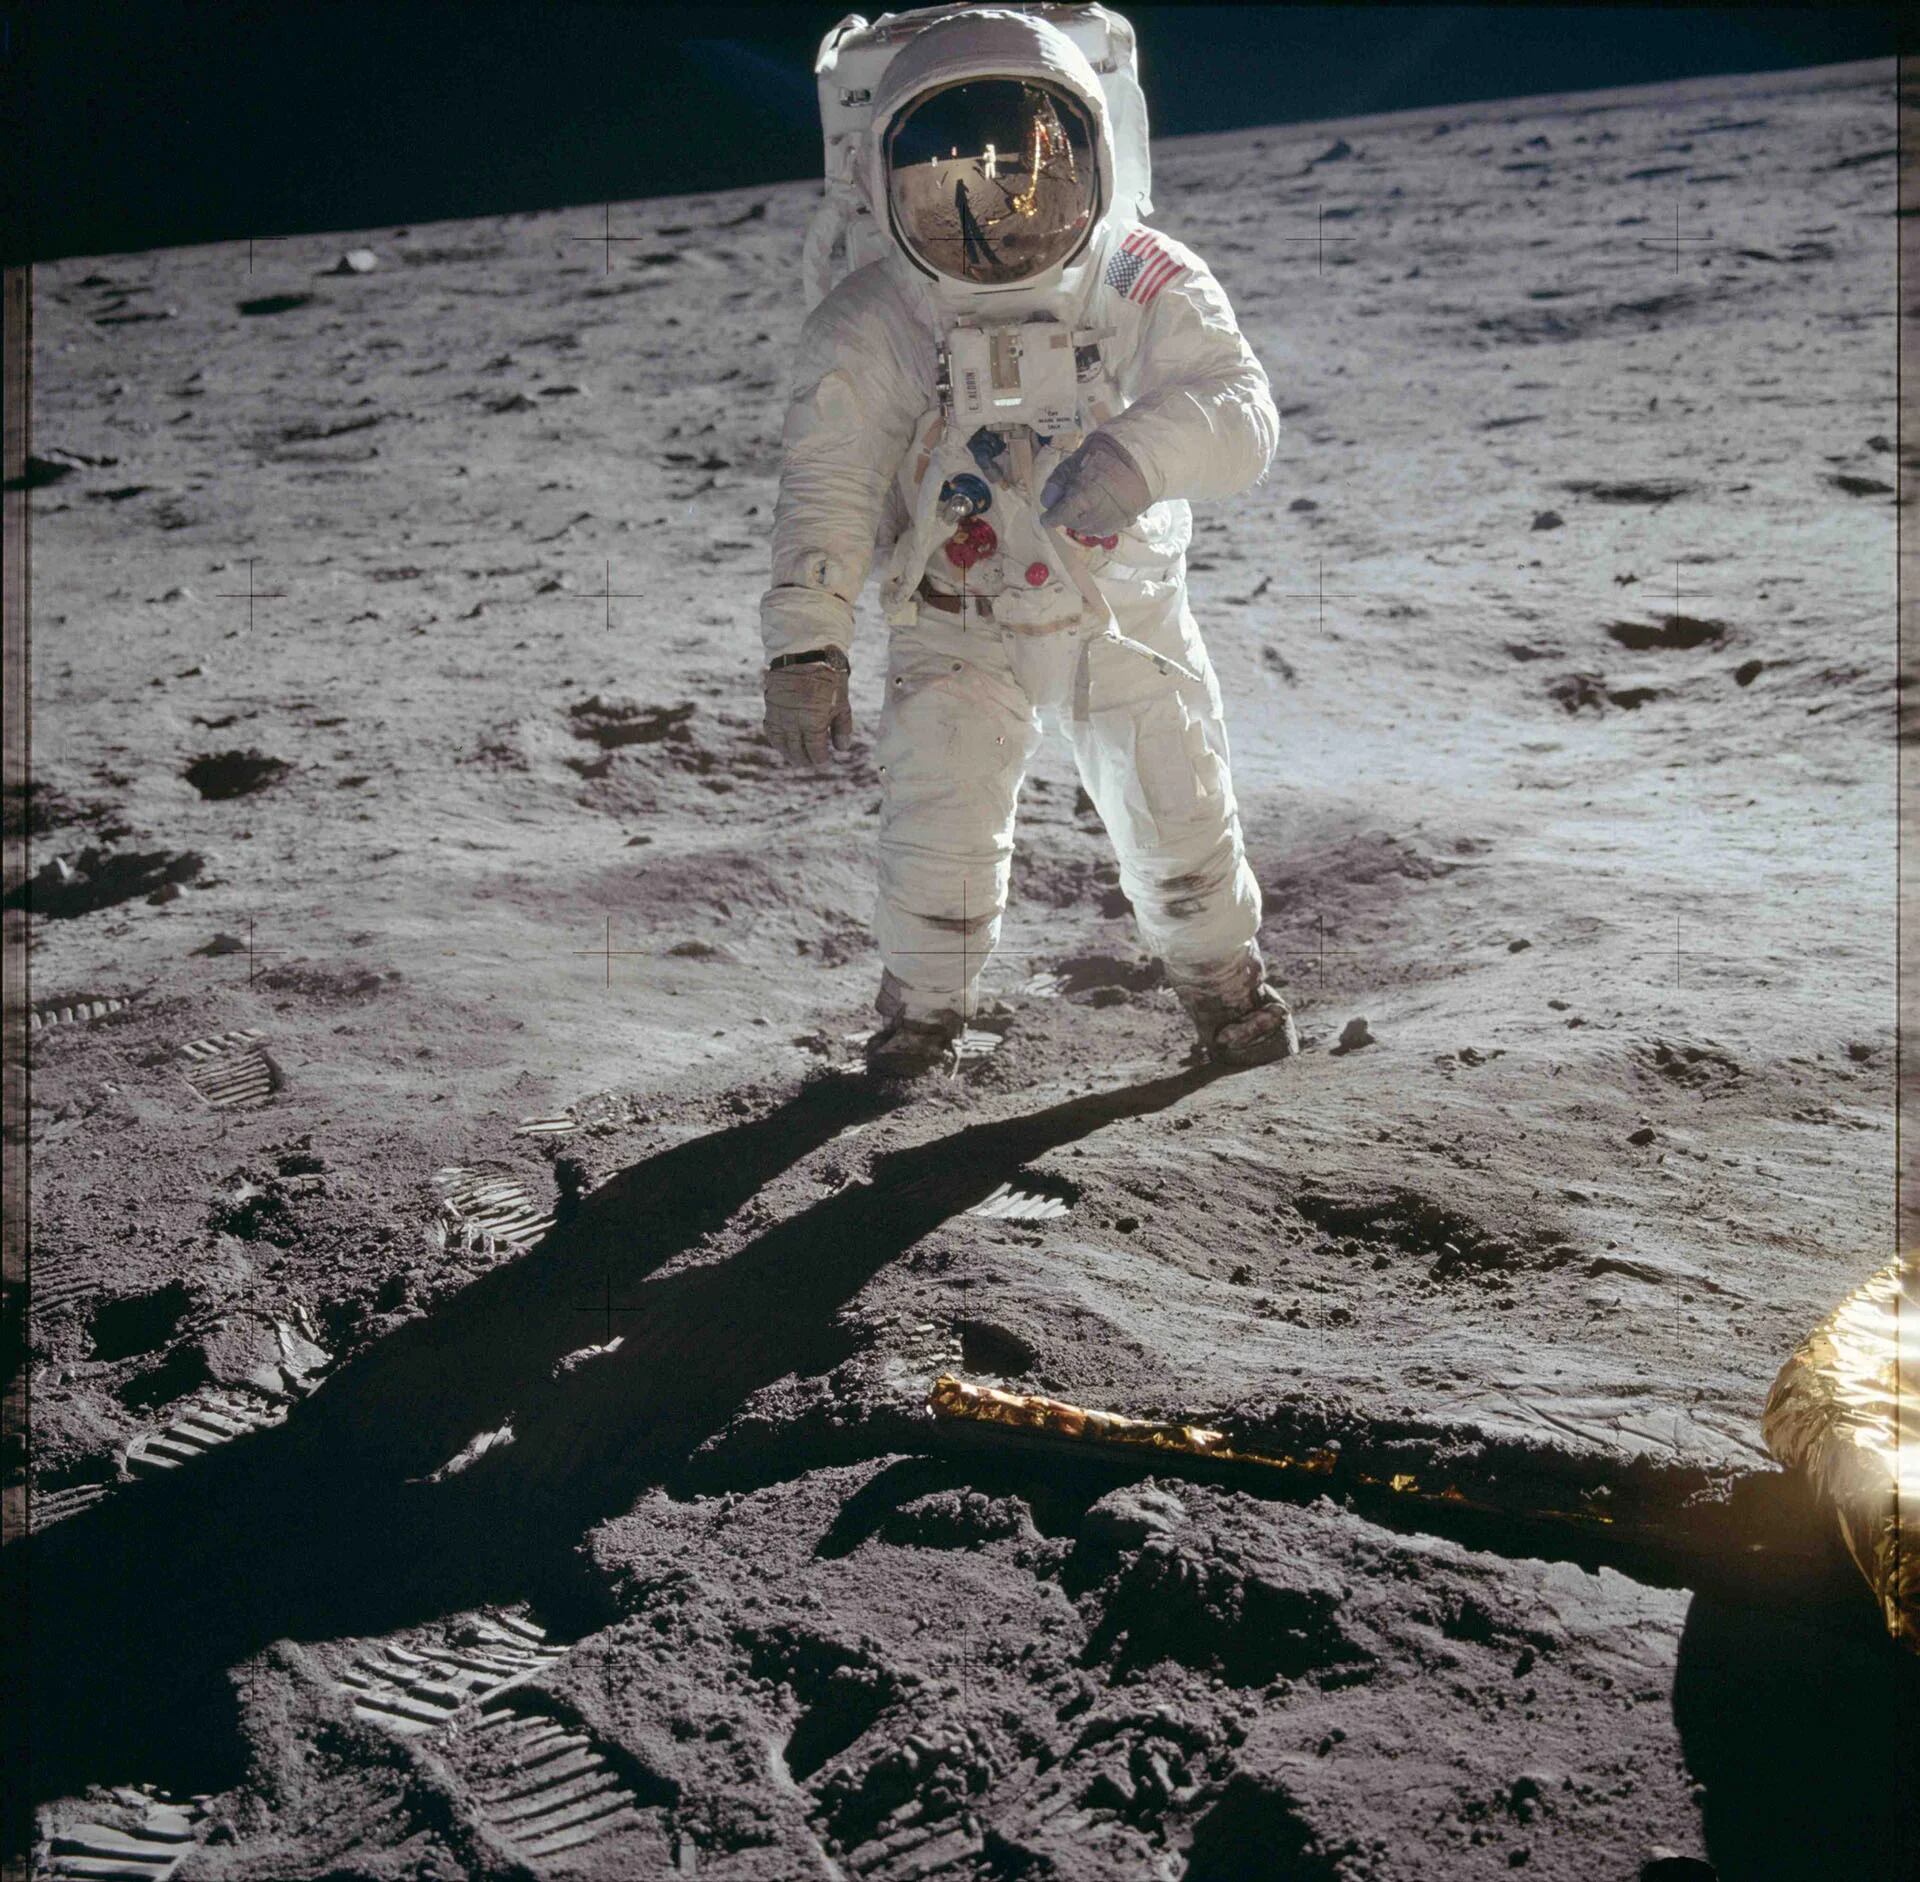 El astronauta Edwin E. Aldrin Jr., piloto del módulo lunar, camina sobre la superficie de la luna, el 20 de julio de, 1969 (Reuters)